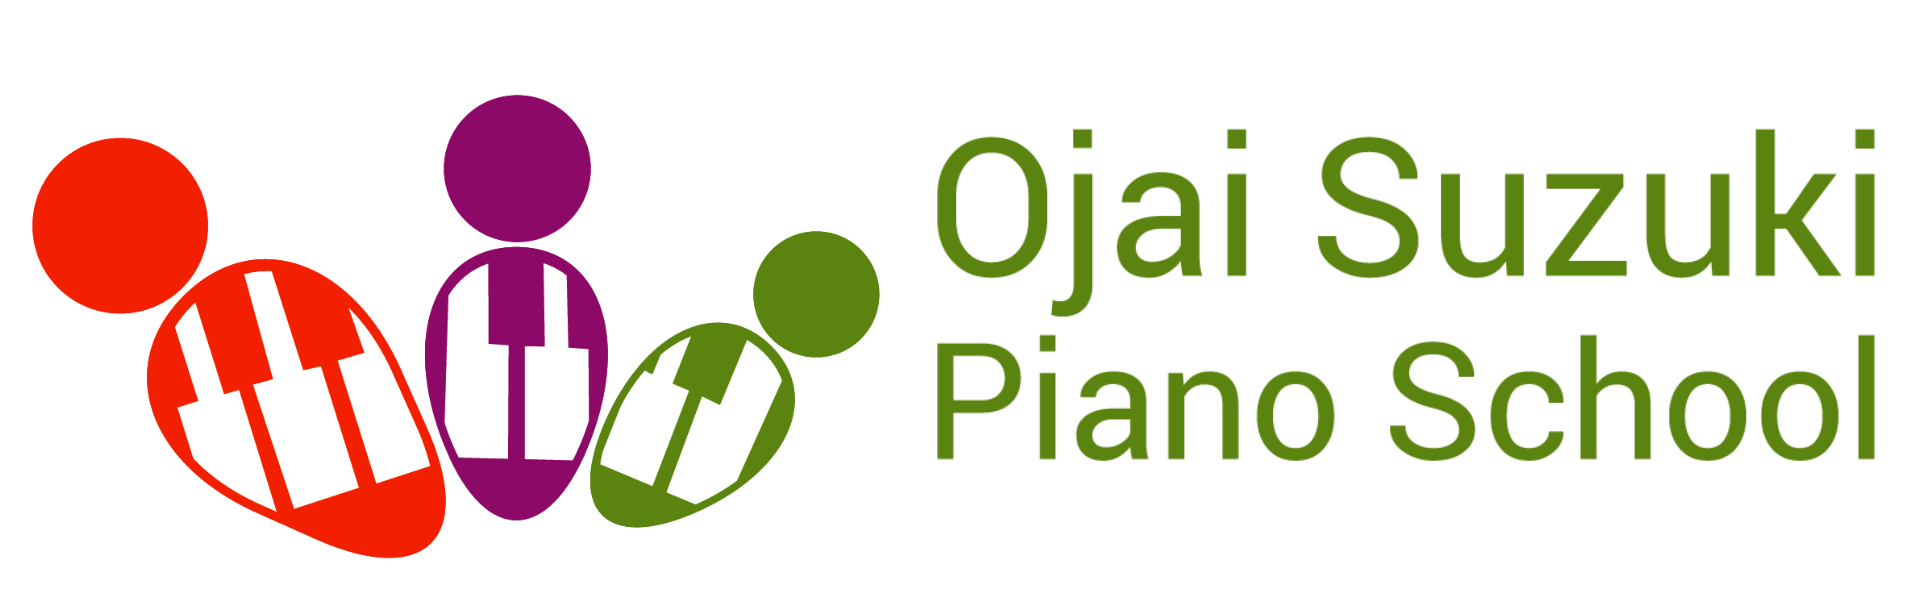 Ojai Suzuki Piano School Online 